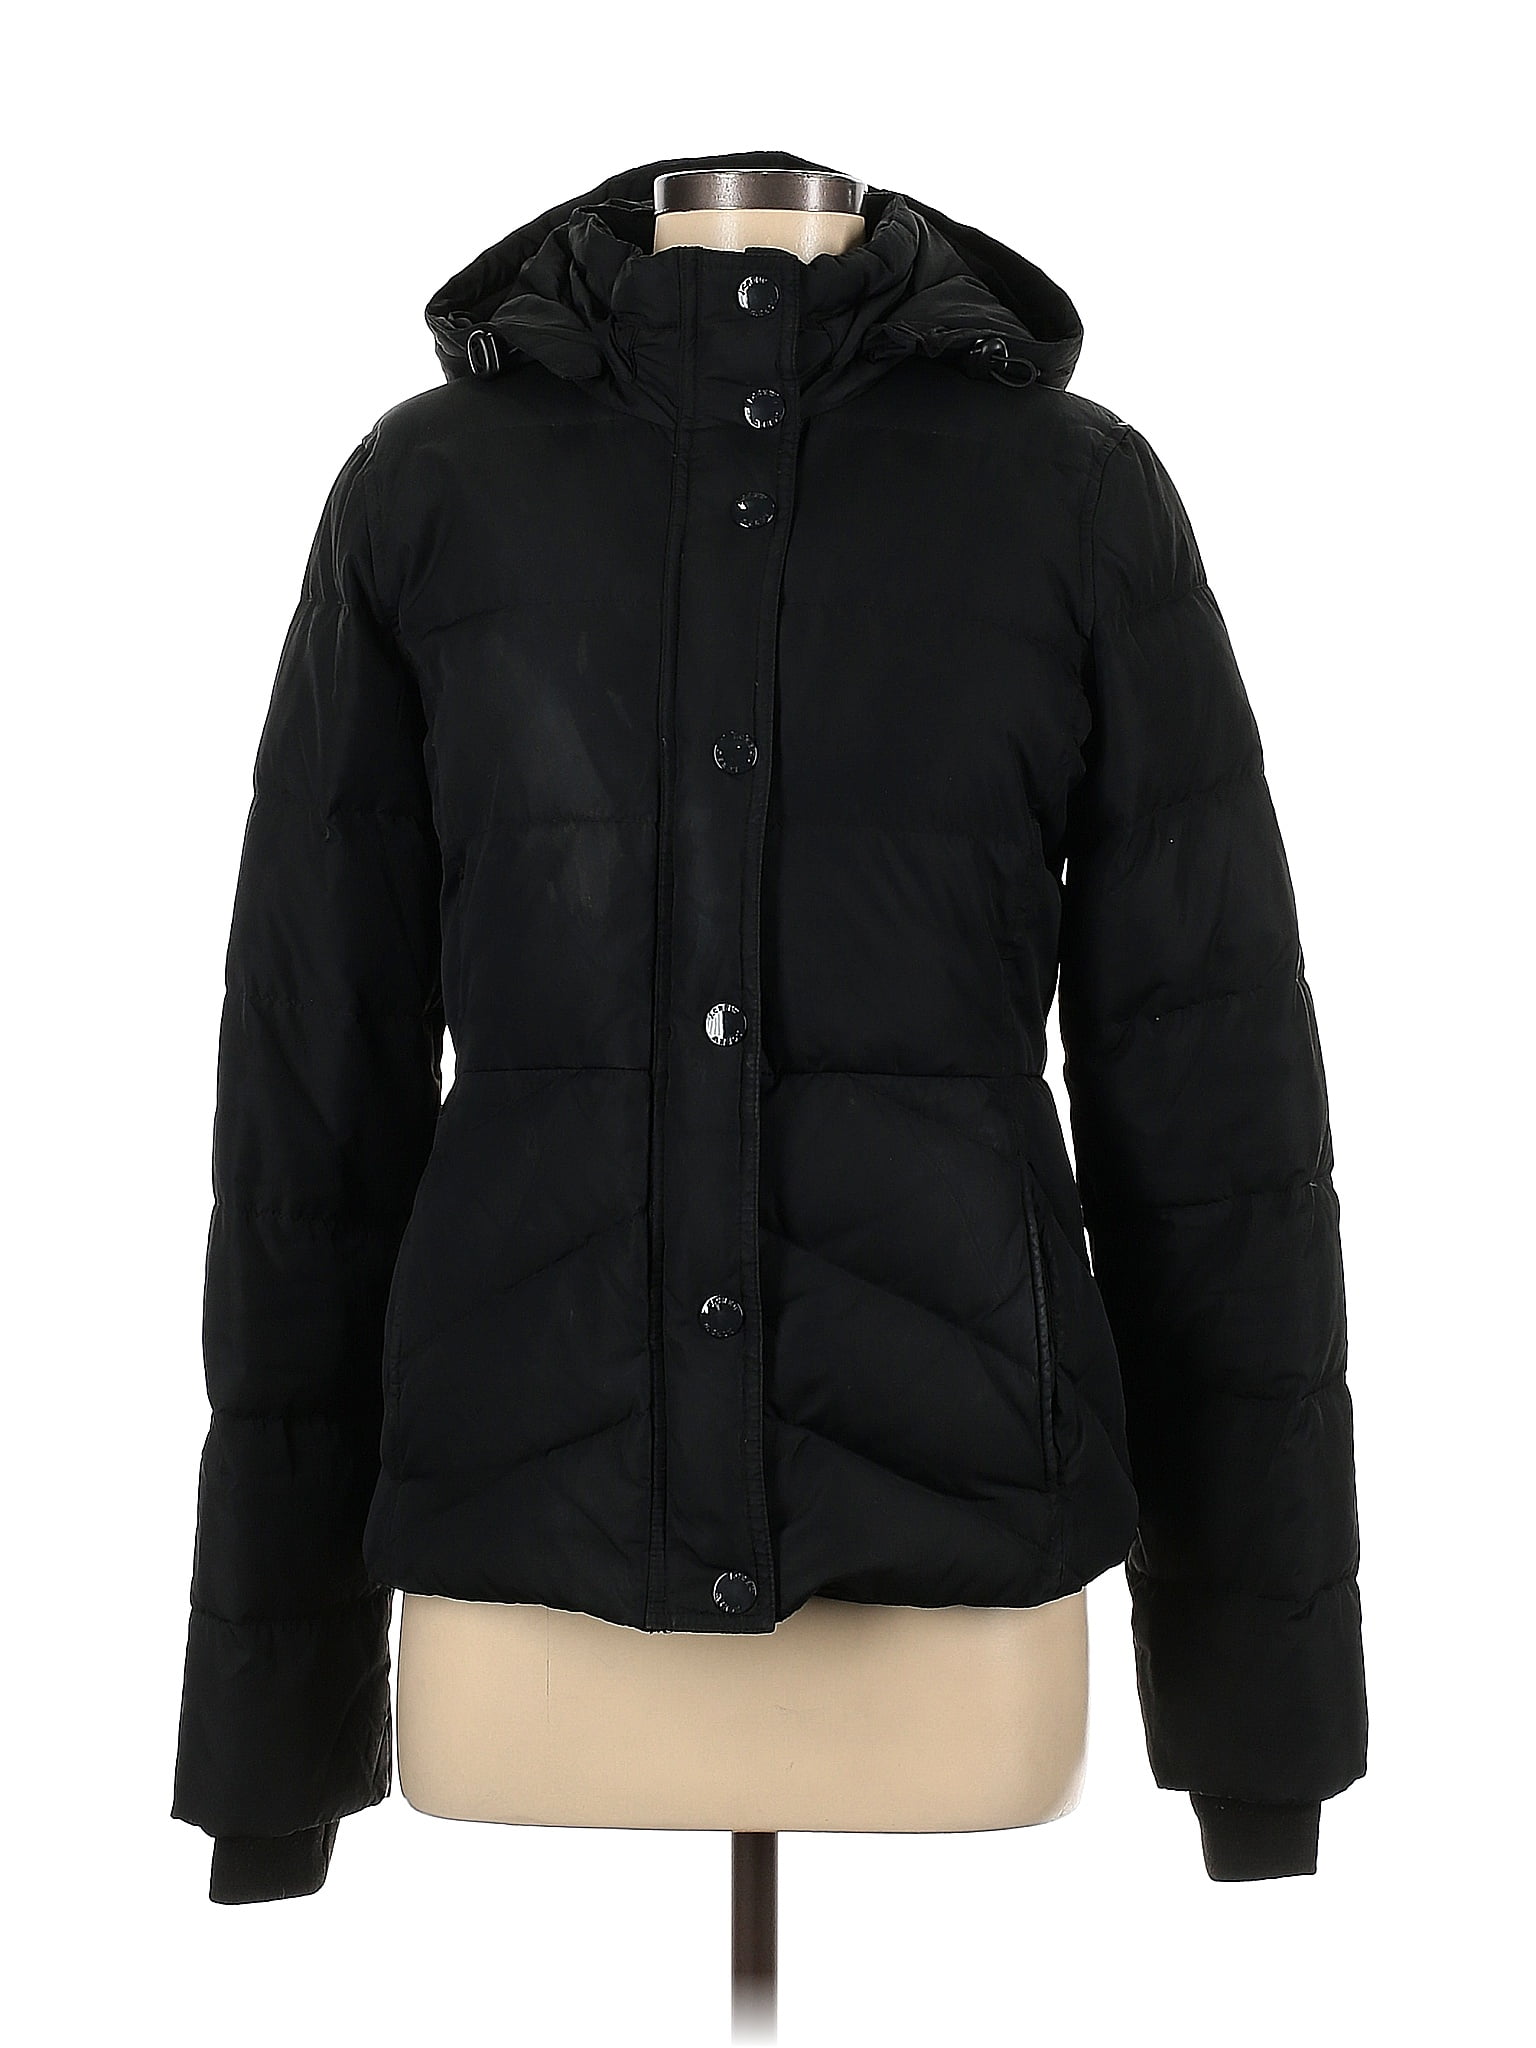 J.Crew Solid Black Coat One Size - 83% off | ThredUp